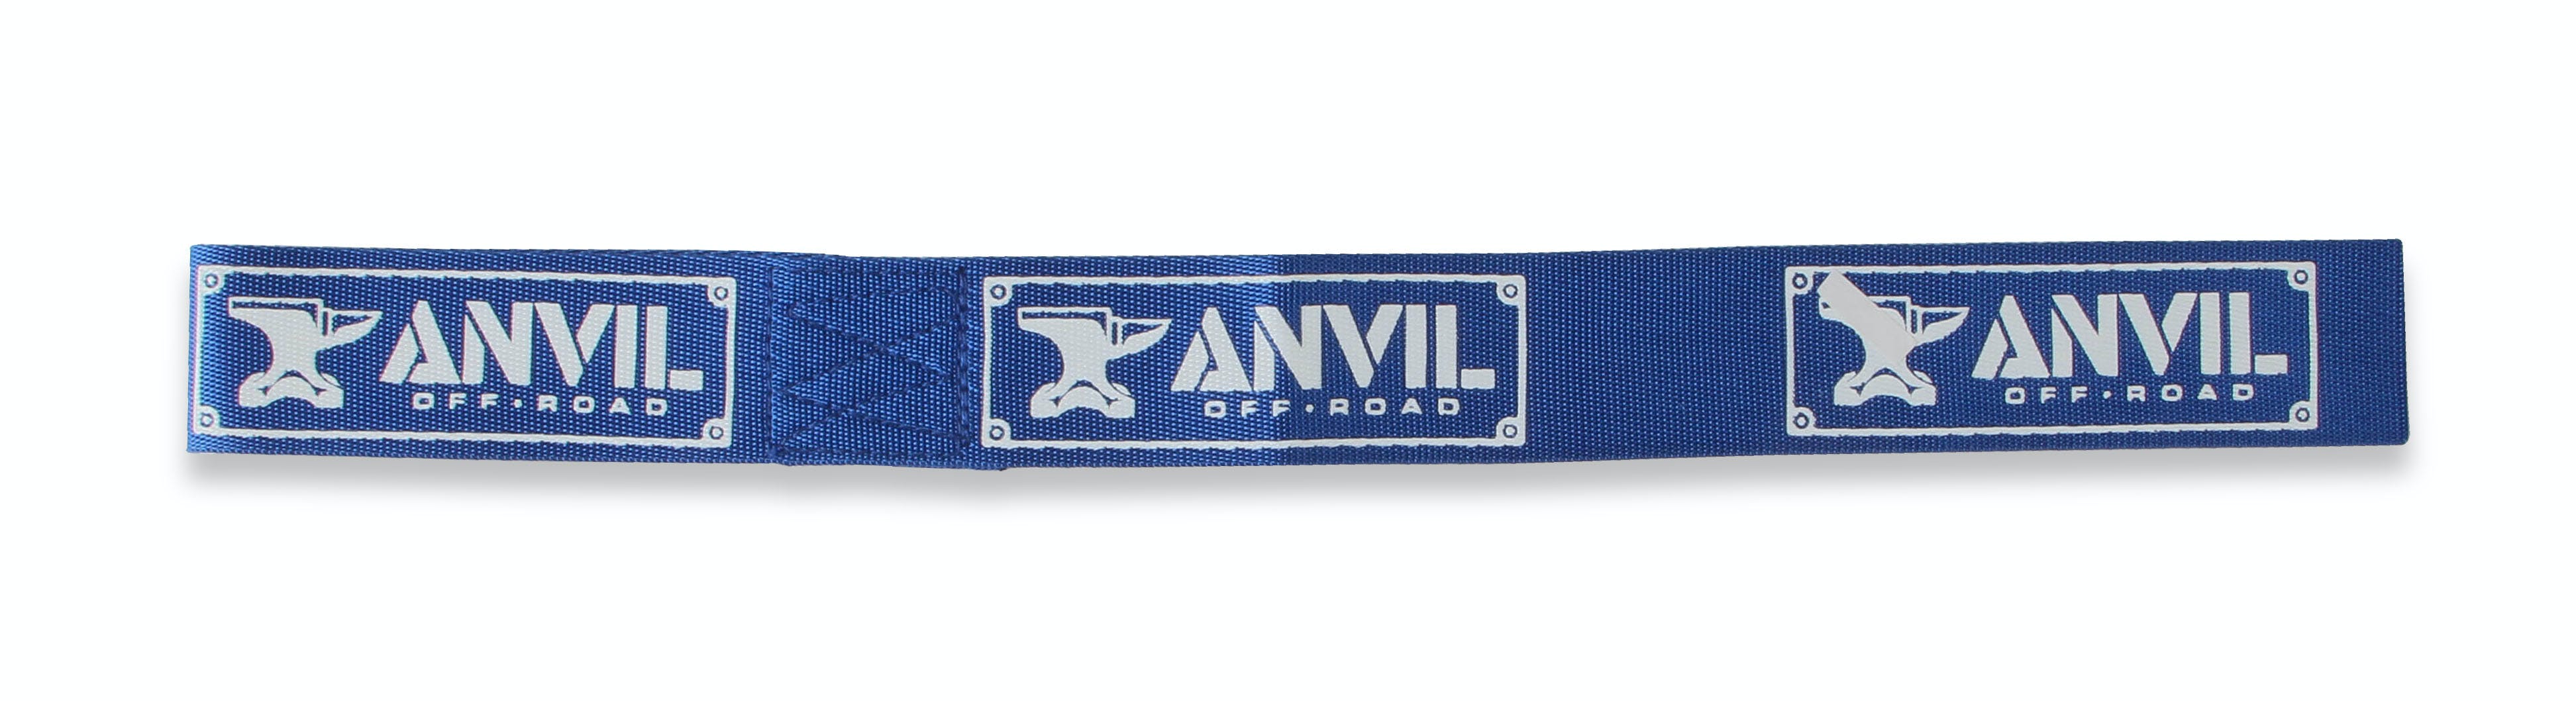 Anvil Off-Road 1140AOR NYLON HOOK HANDLE BLUE W/ ANVIL LOGO